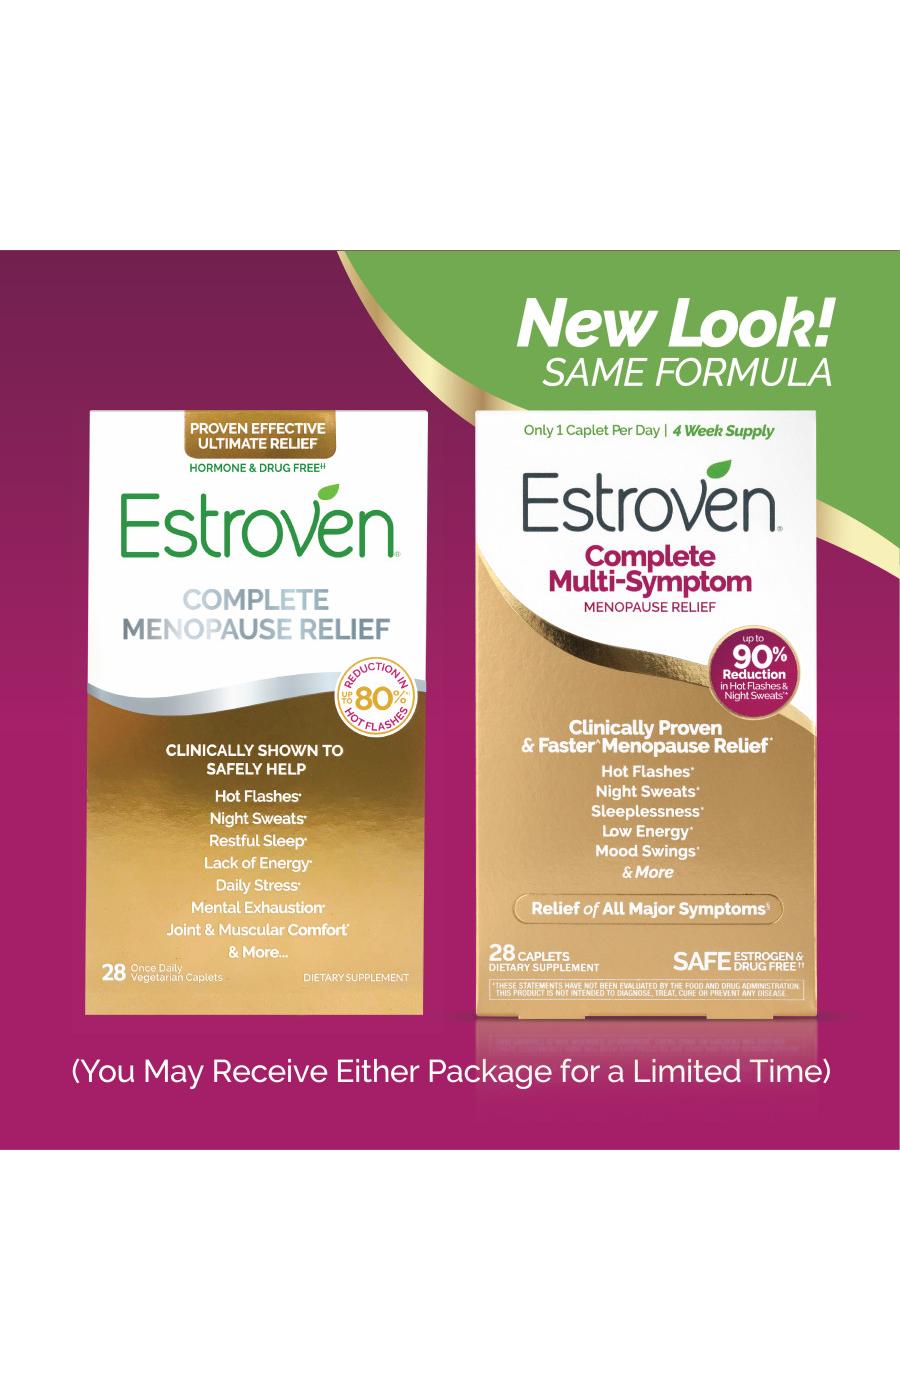 Estroven Complete Menopause Relief; image 2 of 4